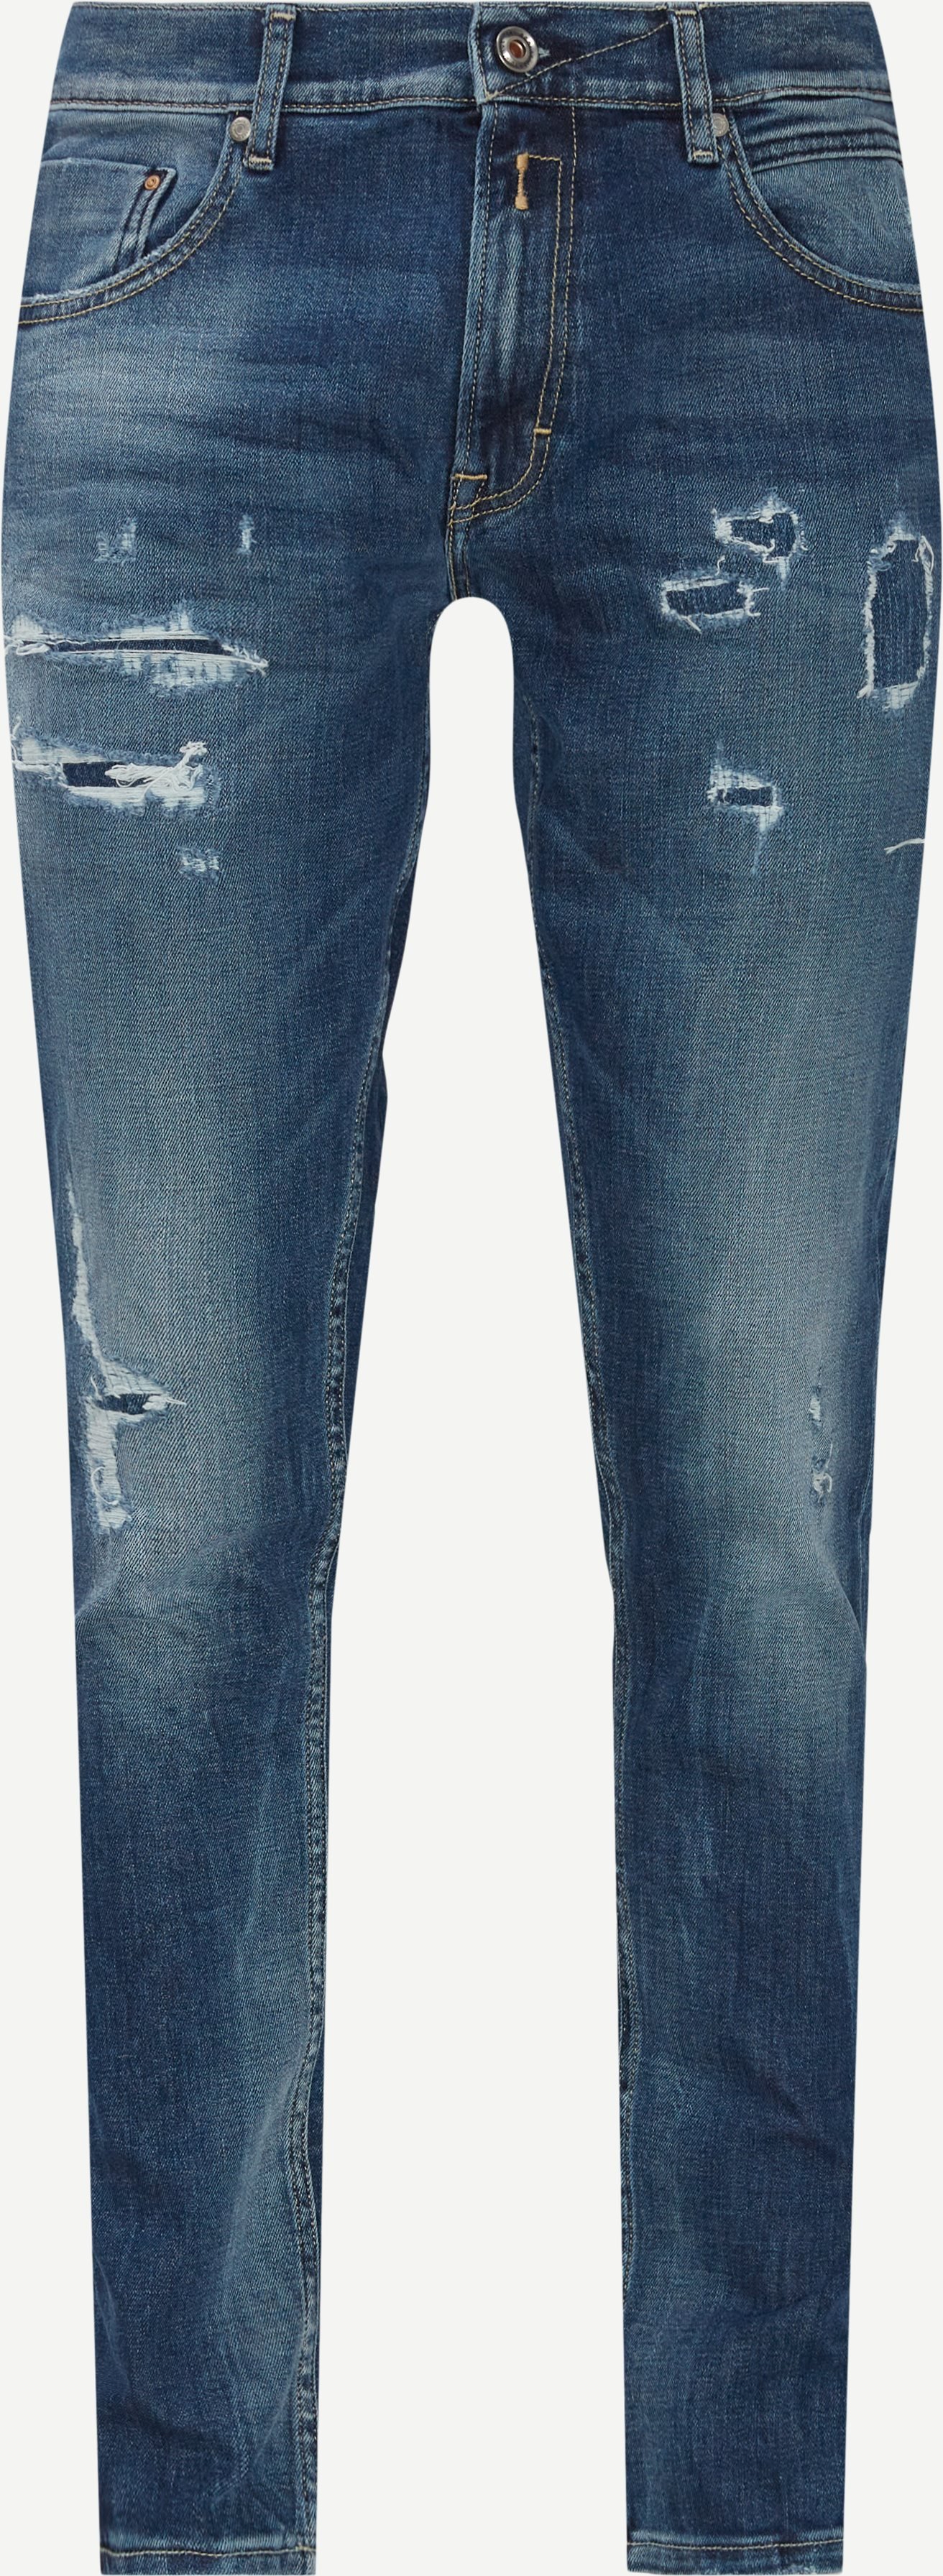 Jeans - Tapered fit - Denim